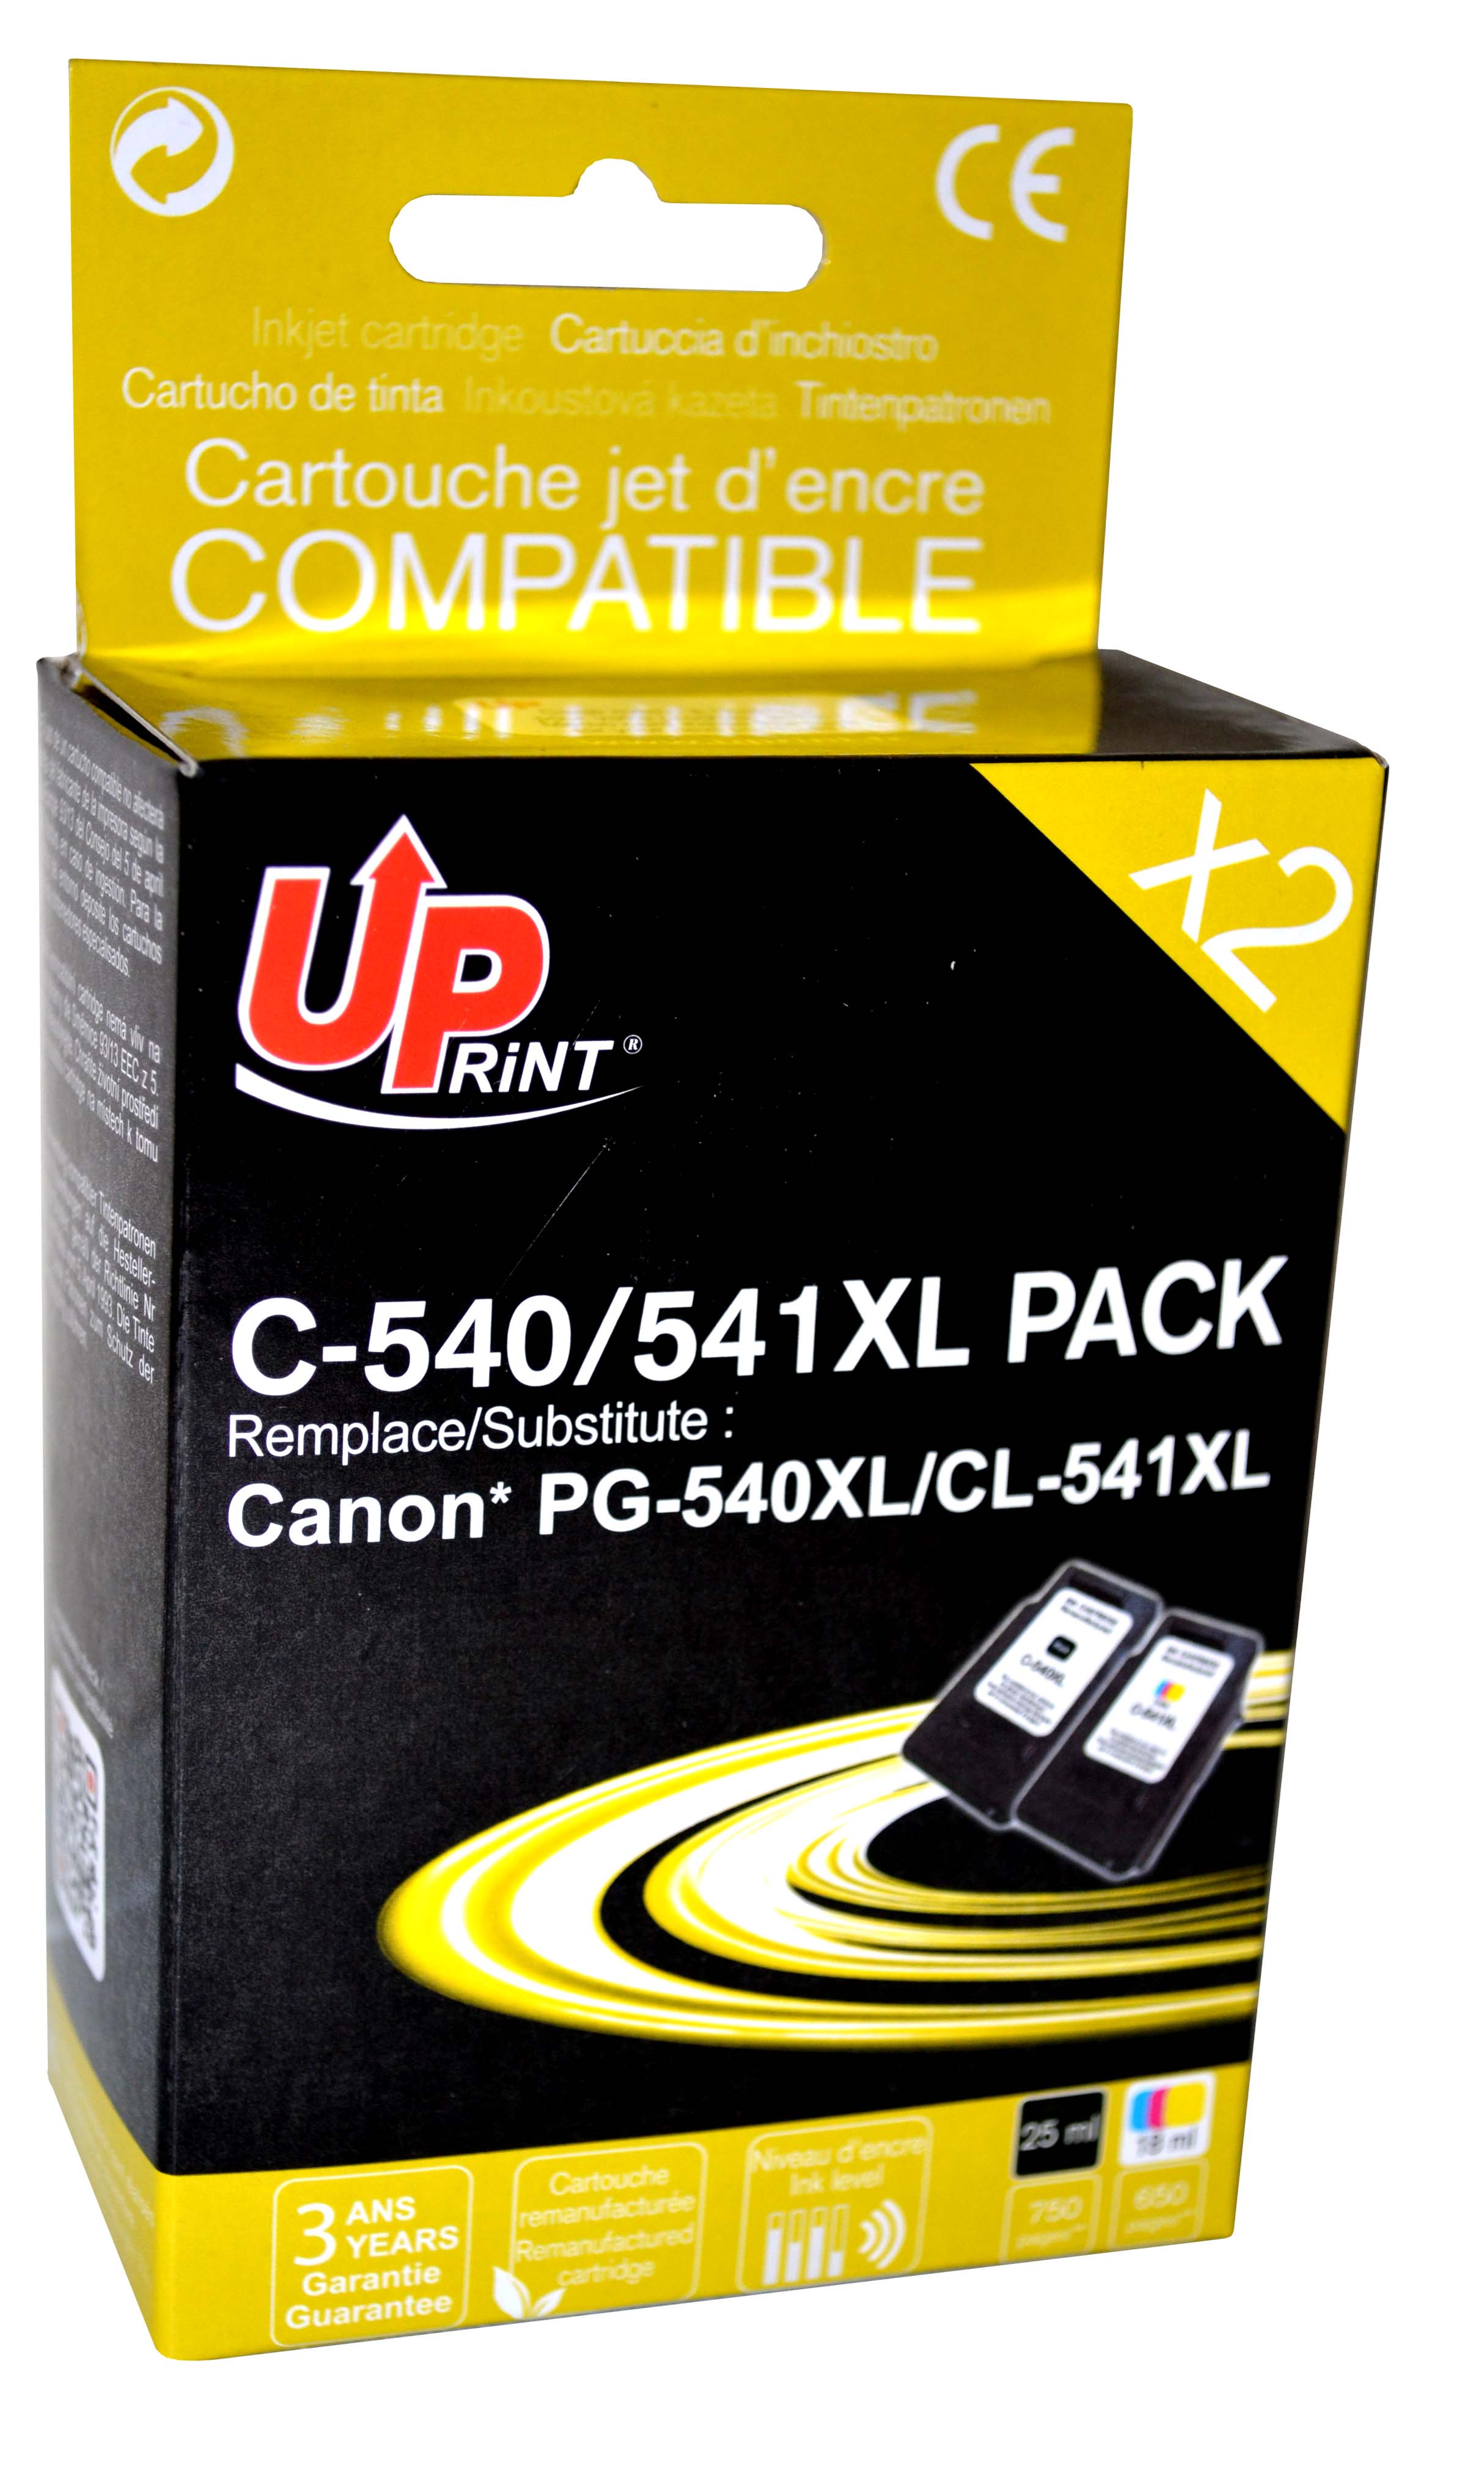 Pack UPrint compatible CANON PG-540XL/CL-541XL, 2 cartouches